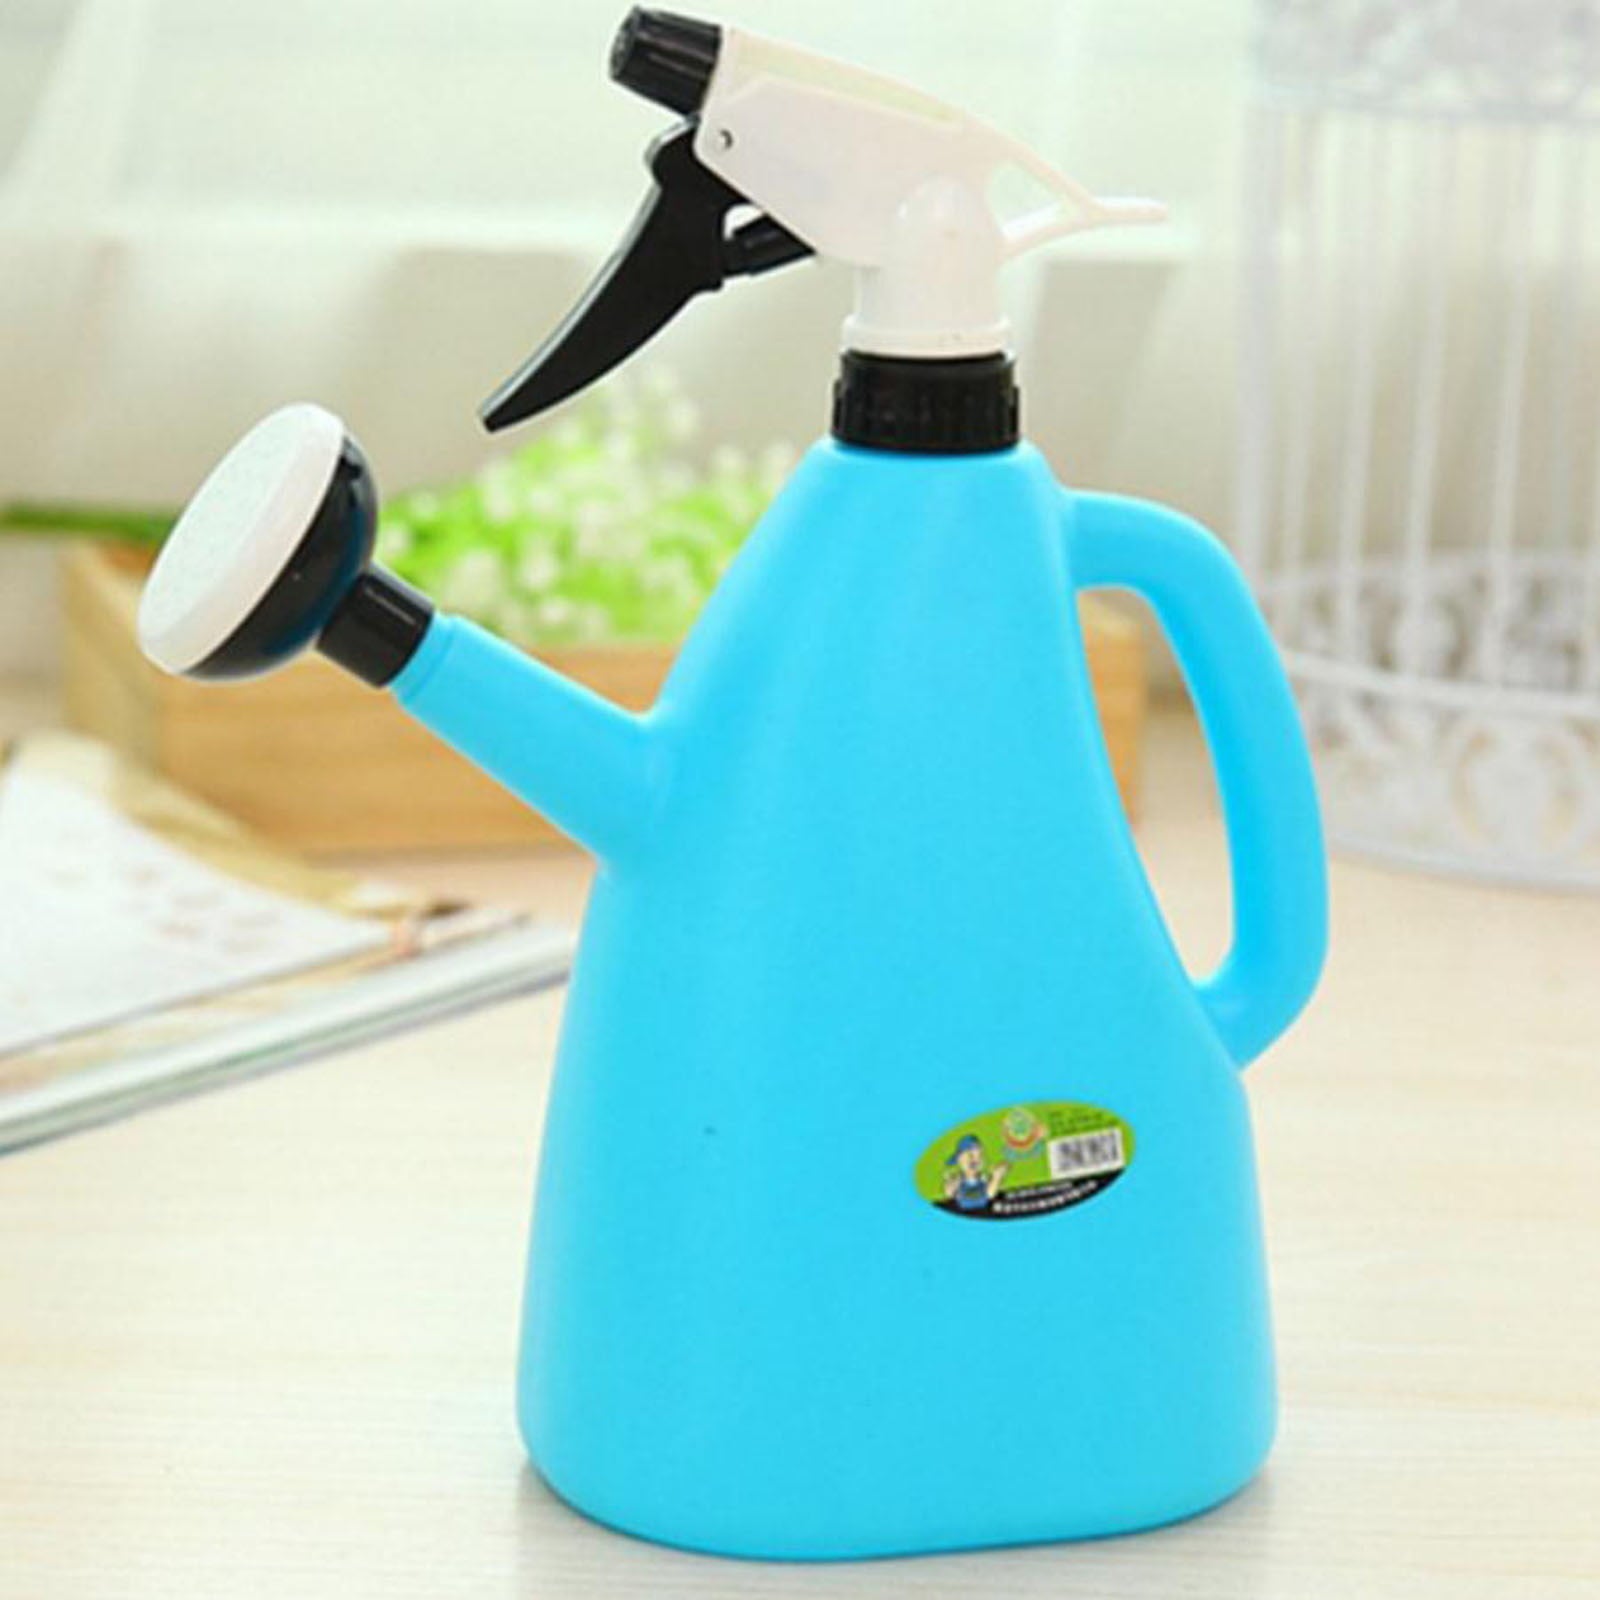 Kettle Watering Watering Can Pressure Watering Bottle Gardening Tools Small